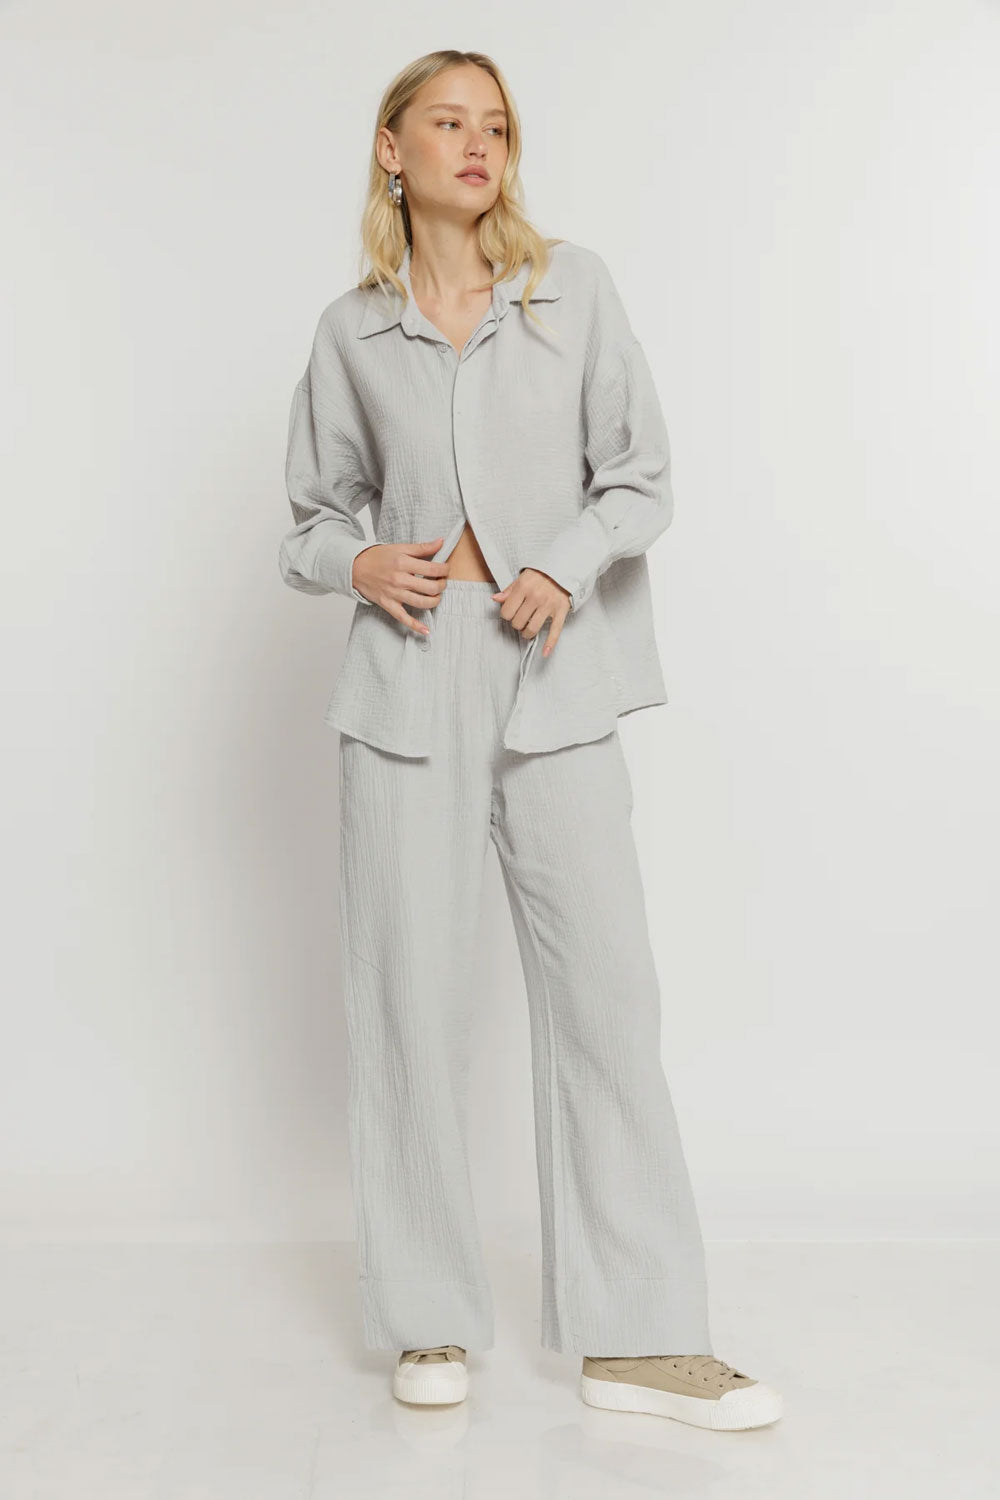 Juicy Couture חולצת טטרה מכופתרת Sigrid בצבע אפור לנשים-Juicy Couture-XS-נאקו